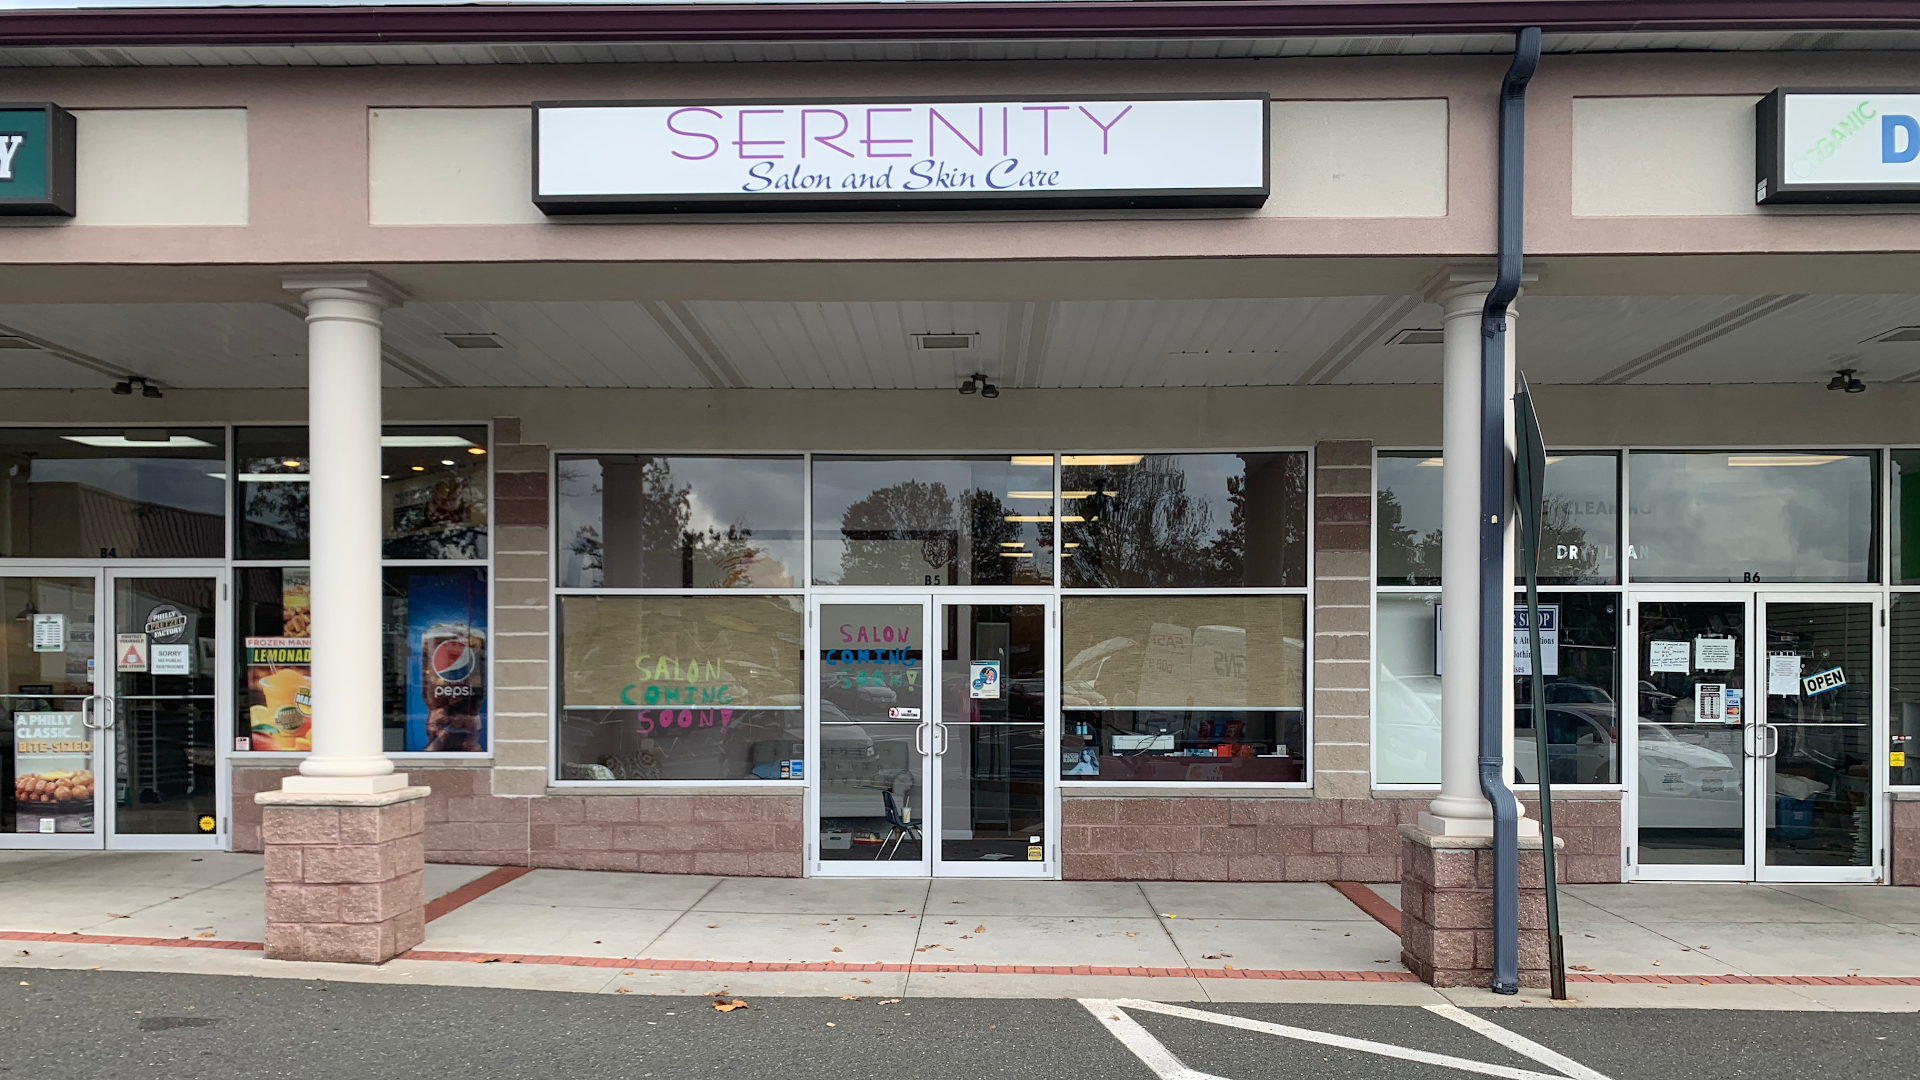 Serenity Salon and Skin Care